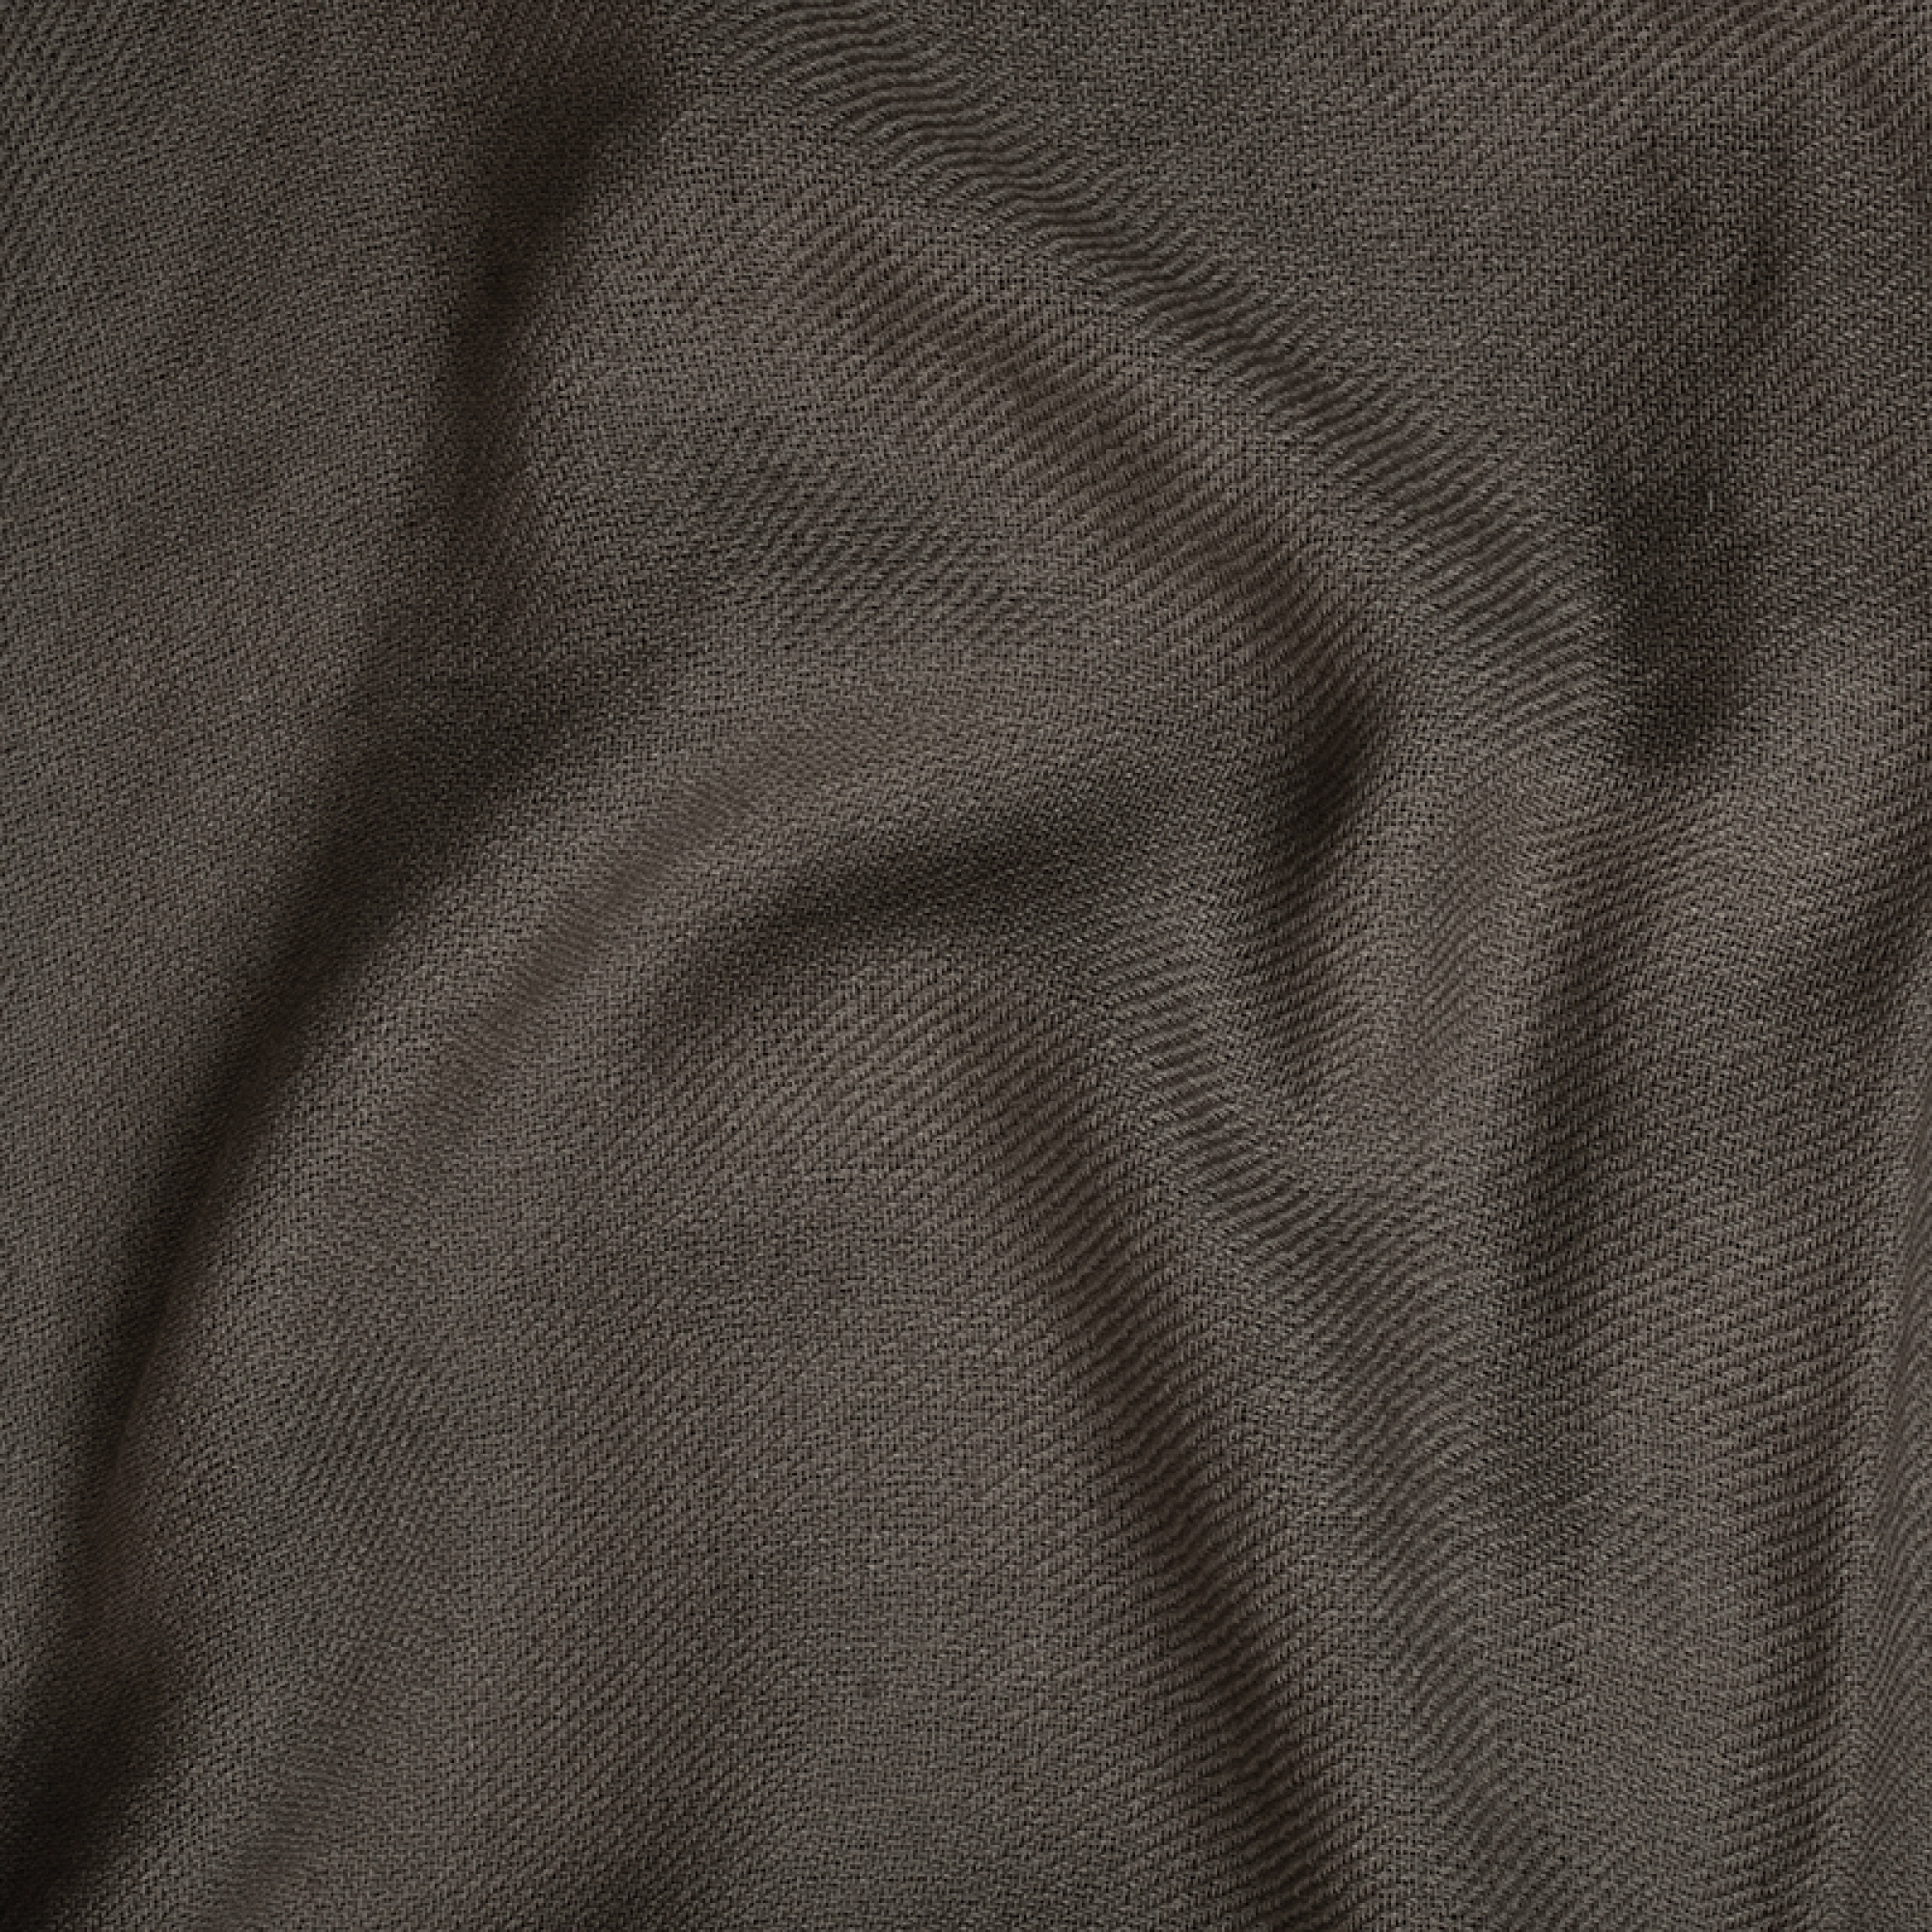 Cashmere accessoires kuschelwelt toodoo plain l 220 x 220 beigebraun 220x220cm